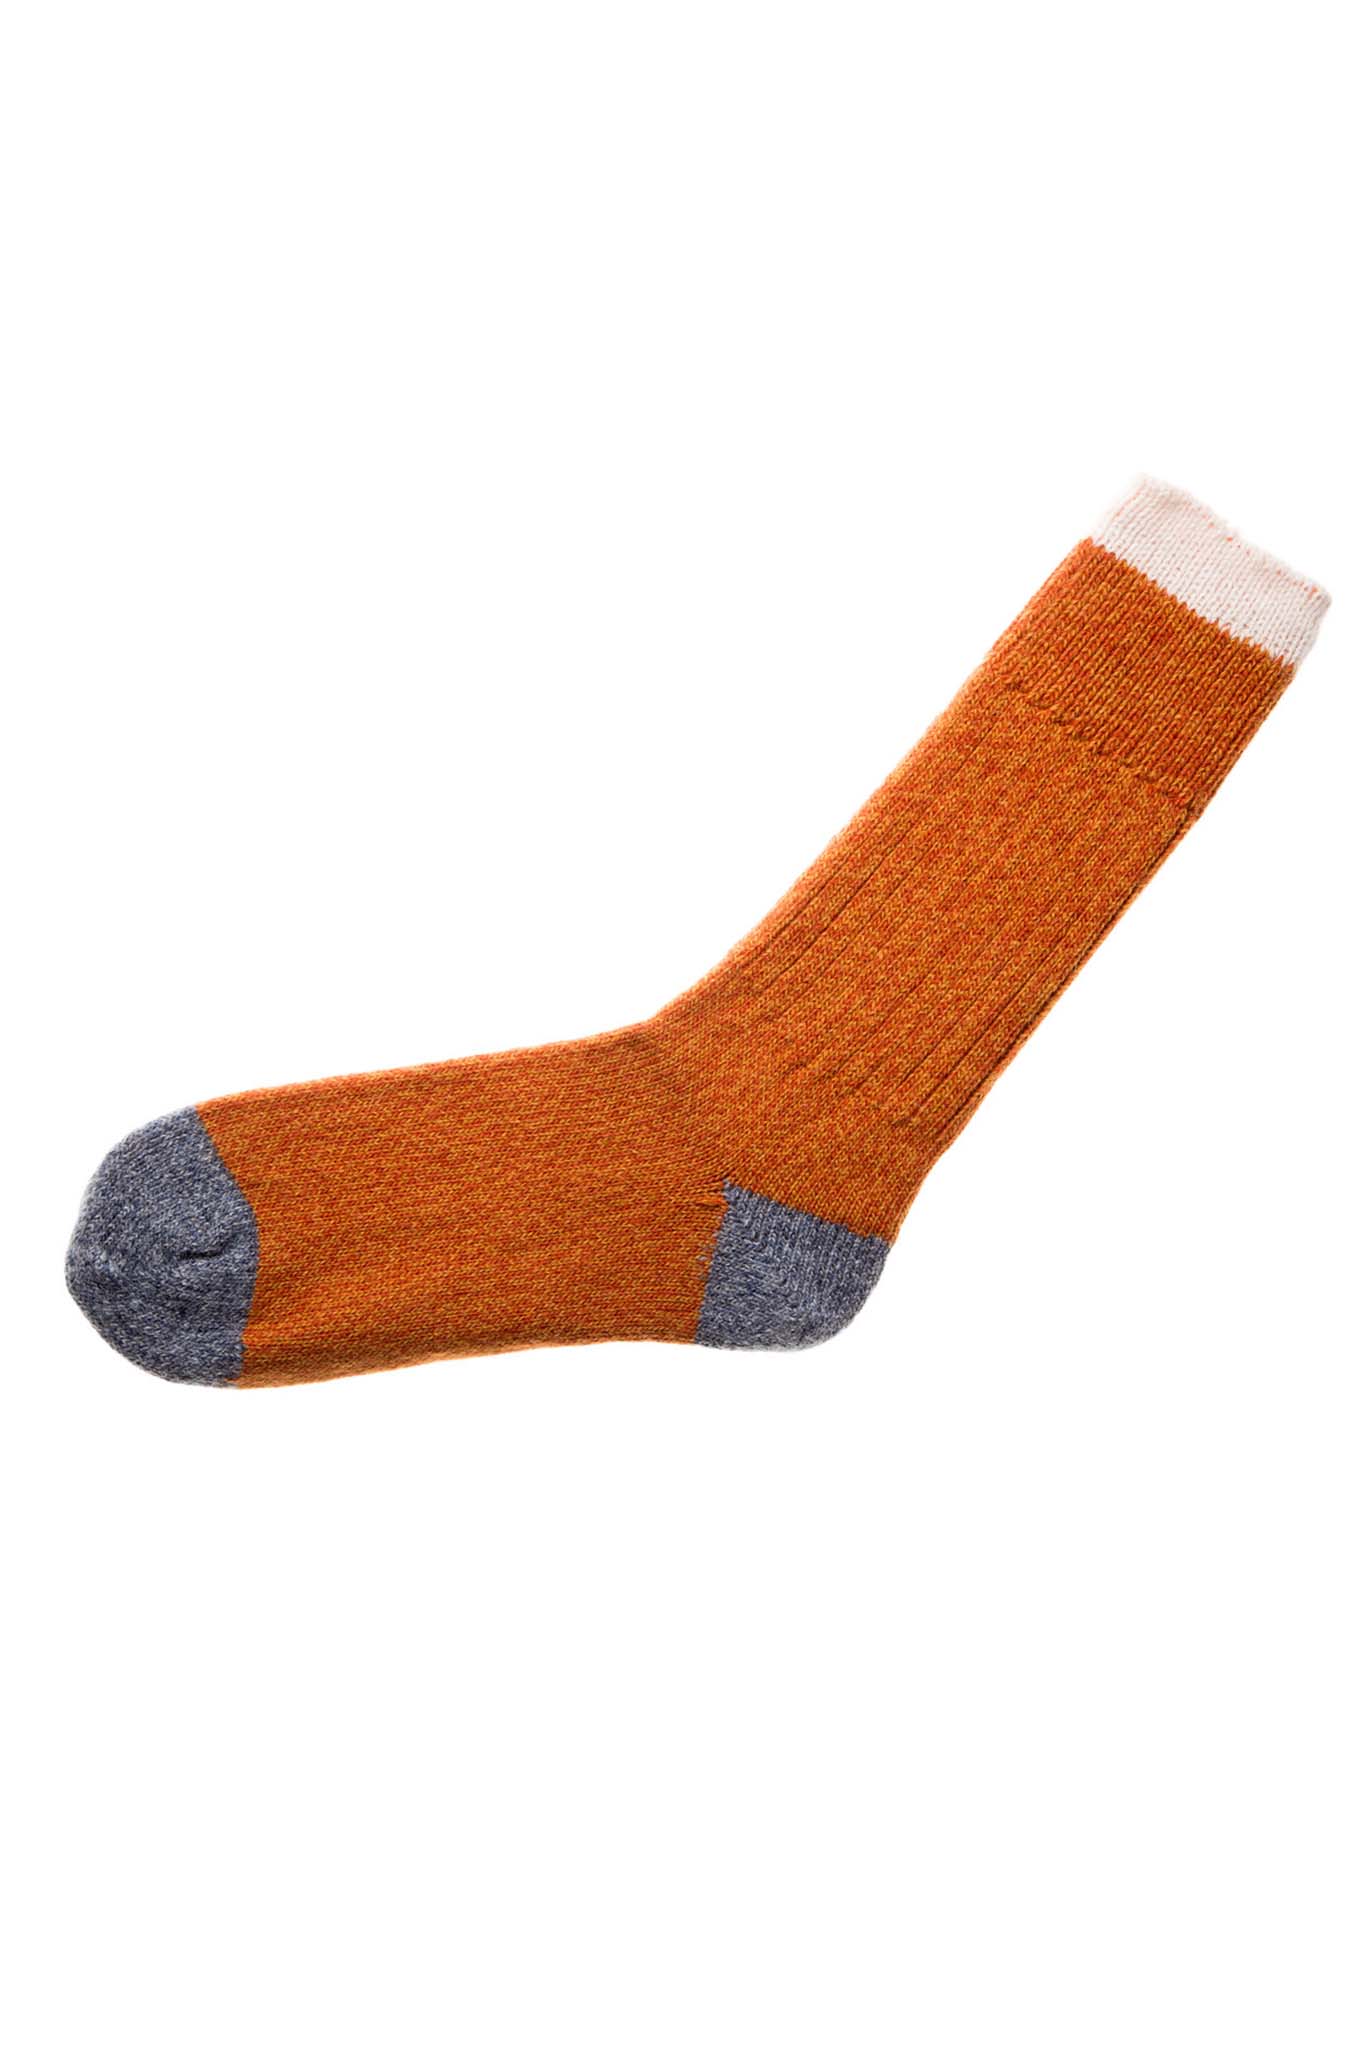 Pata Paca Socks - Melange Orange + Grey